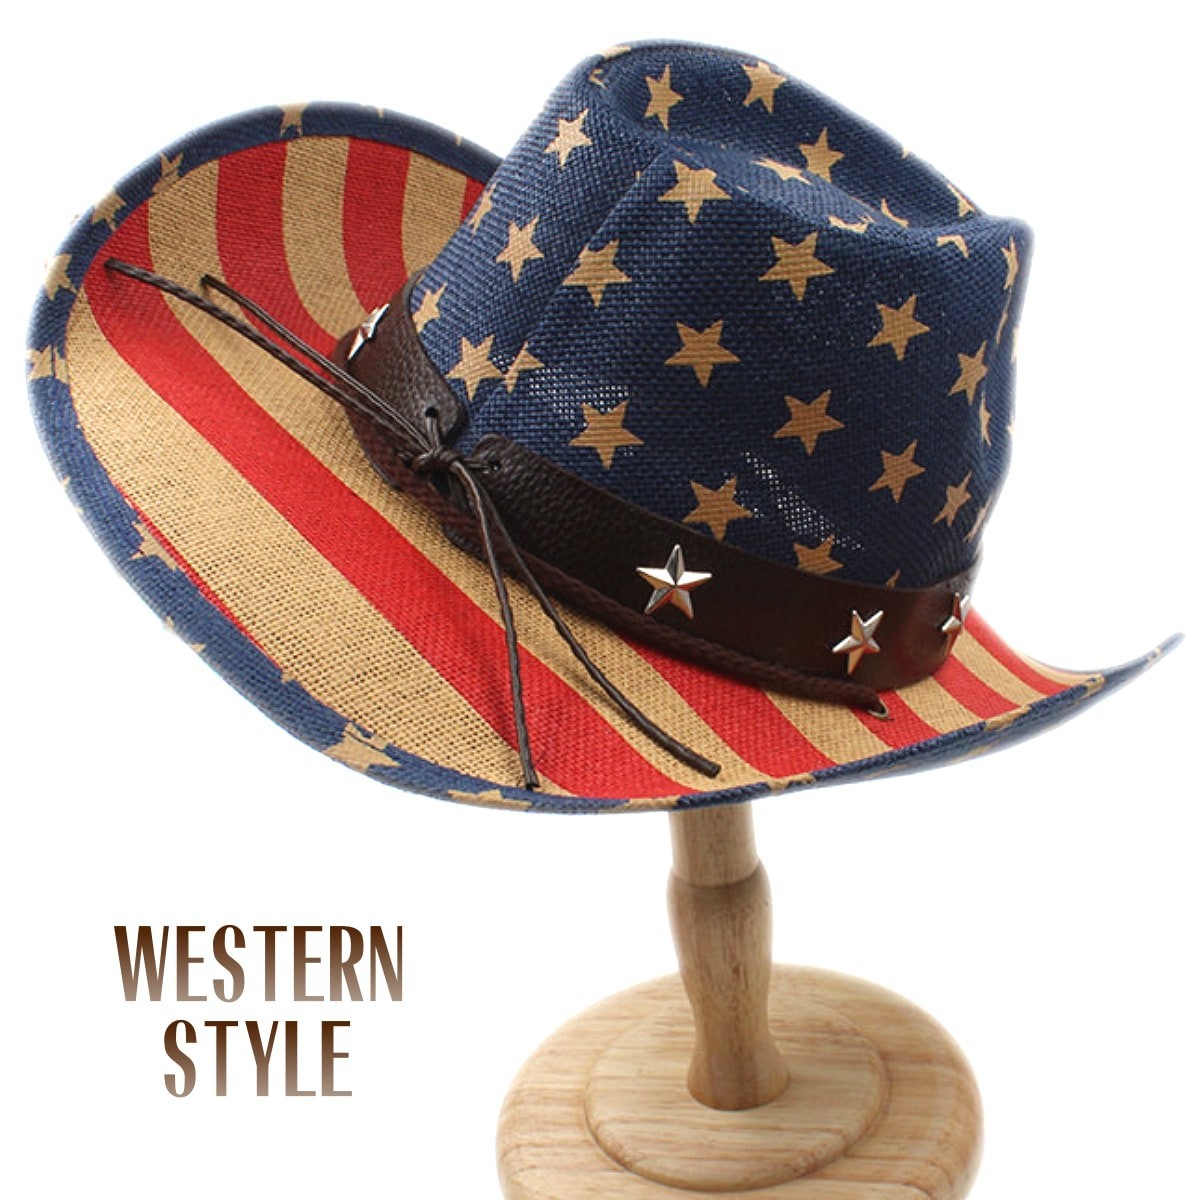  american flag Star studs belt we Stan kau Boy hat! hat ten-gallon hat straw hat straw hat 